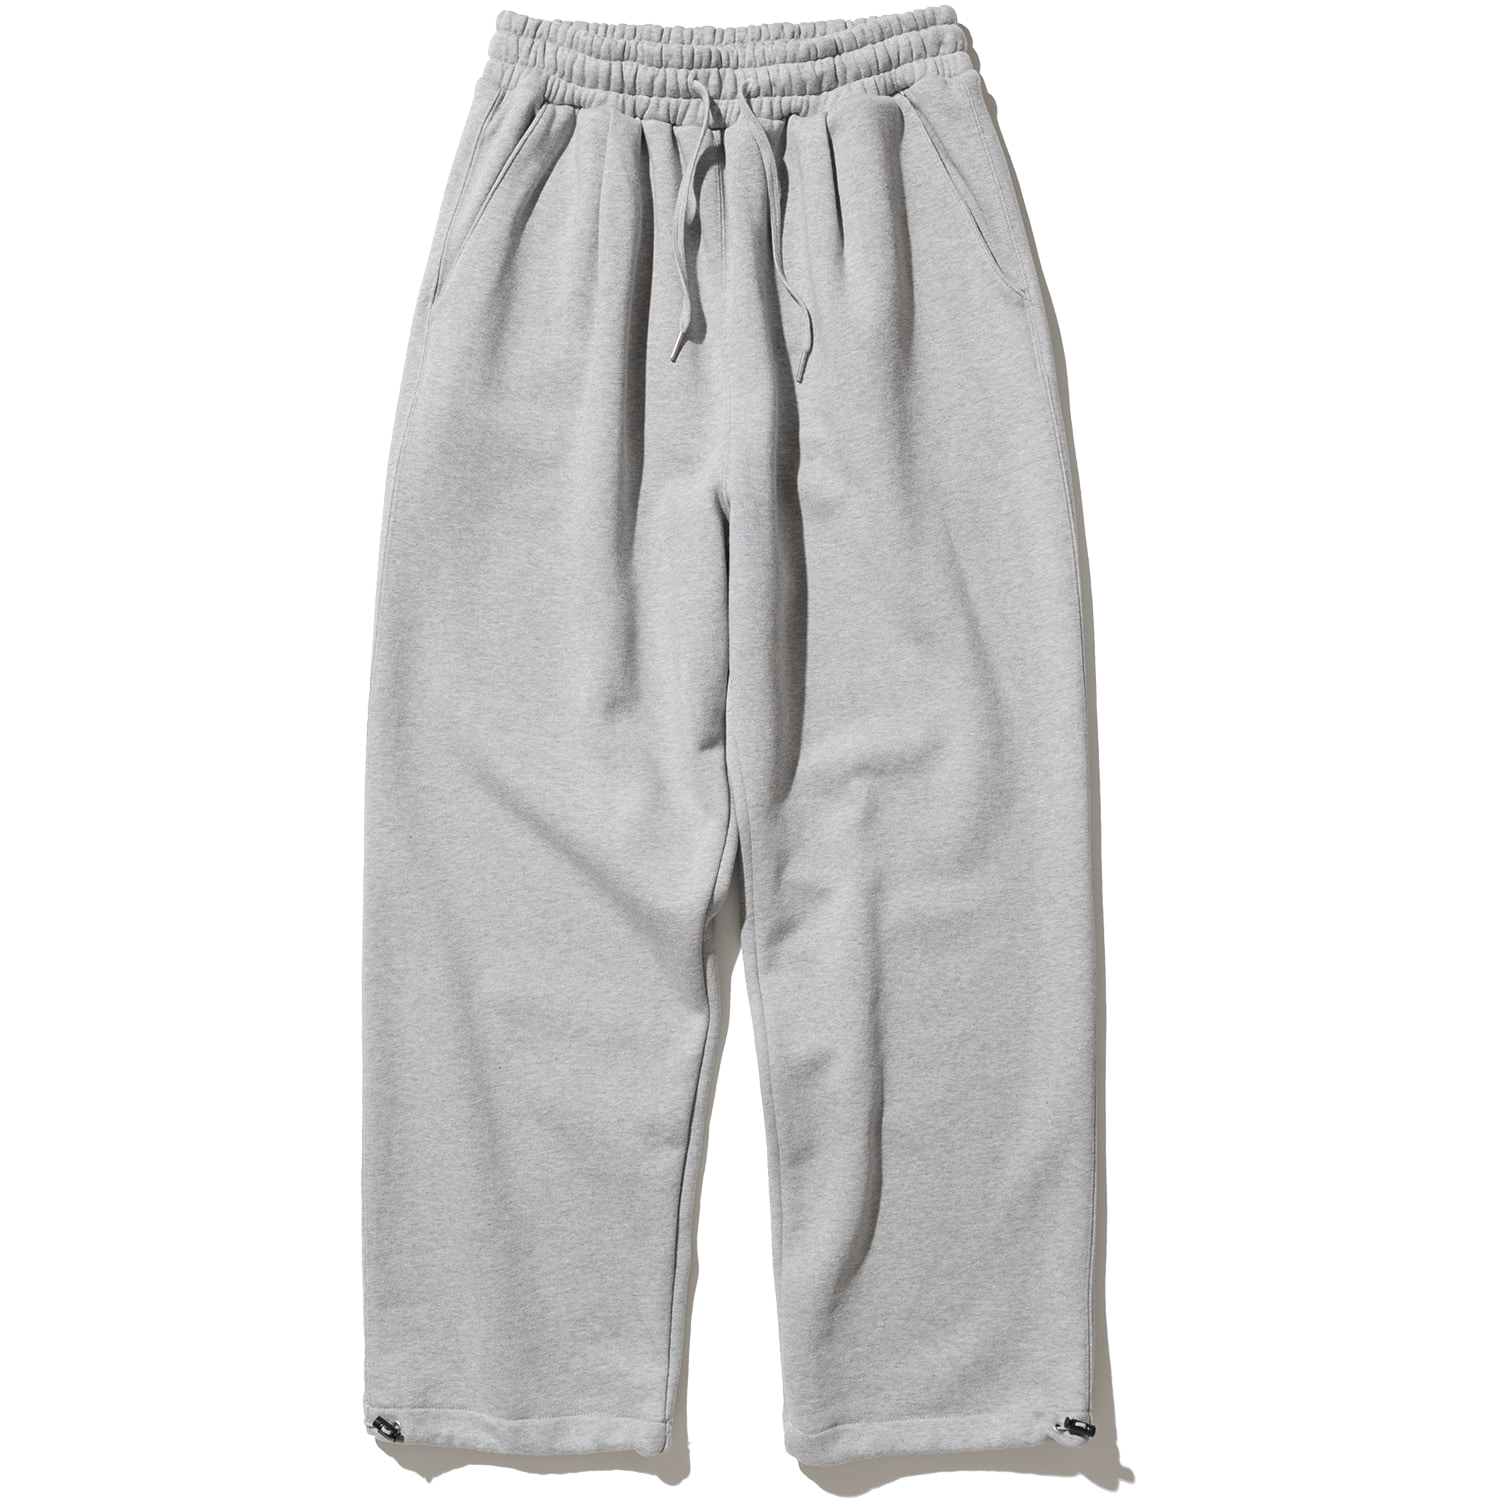 String Sweat Pants - Grey,NOT4NERD